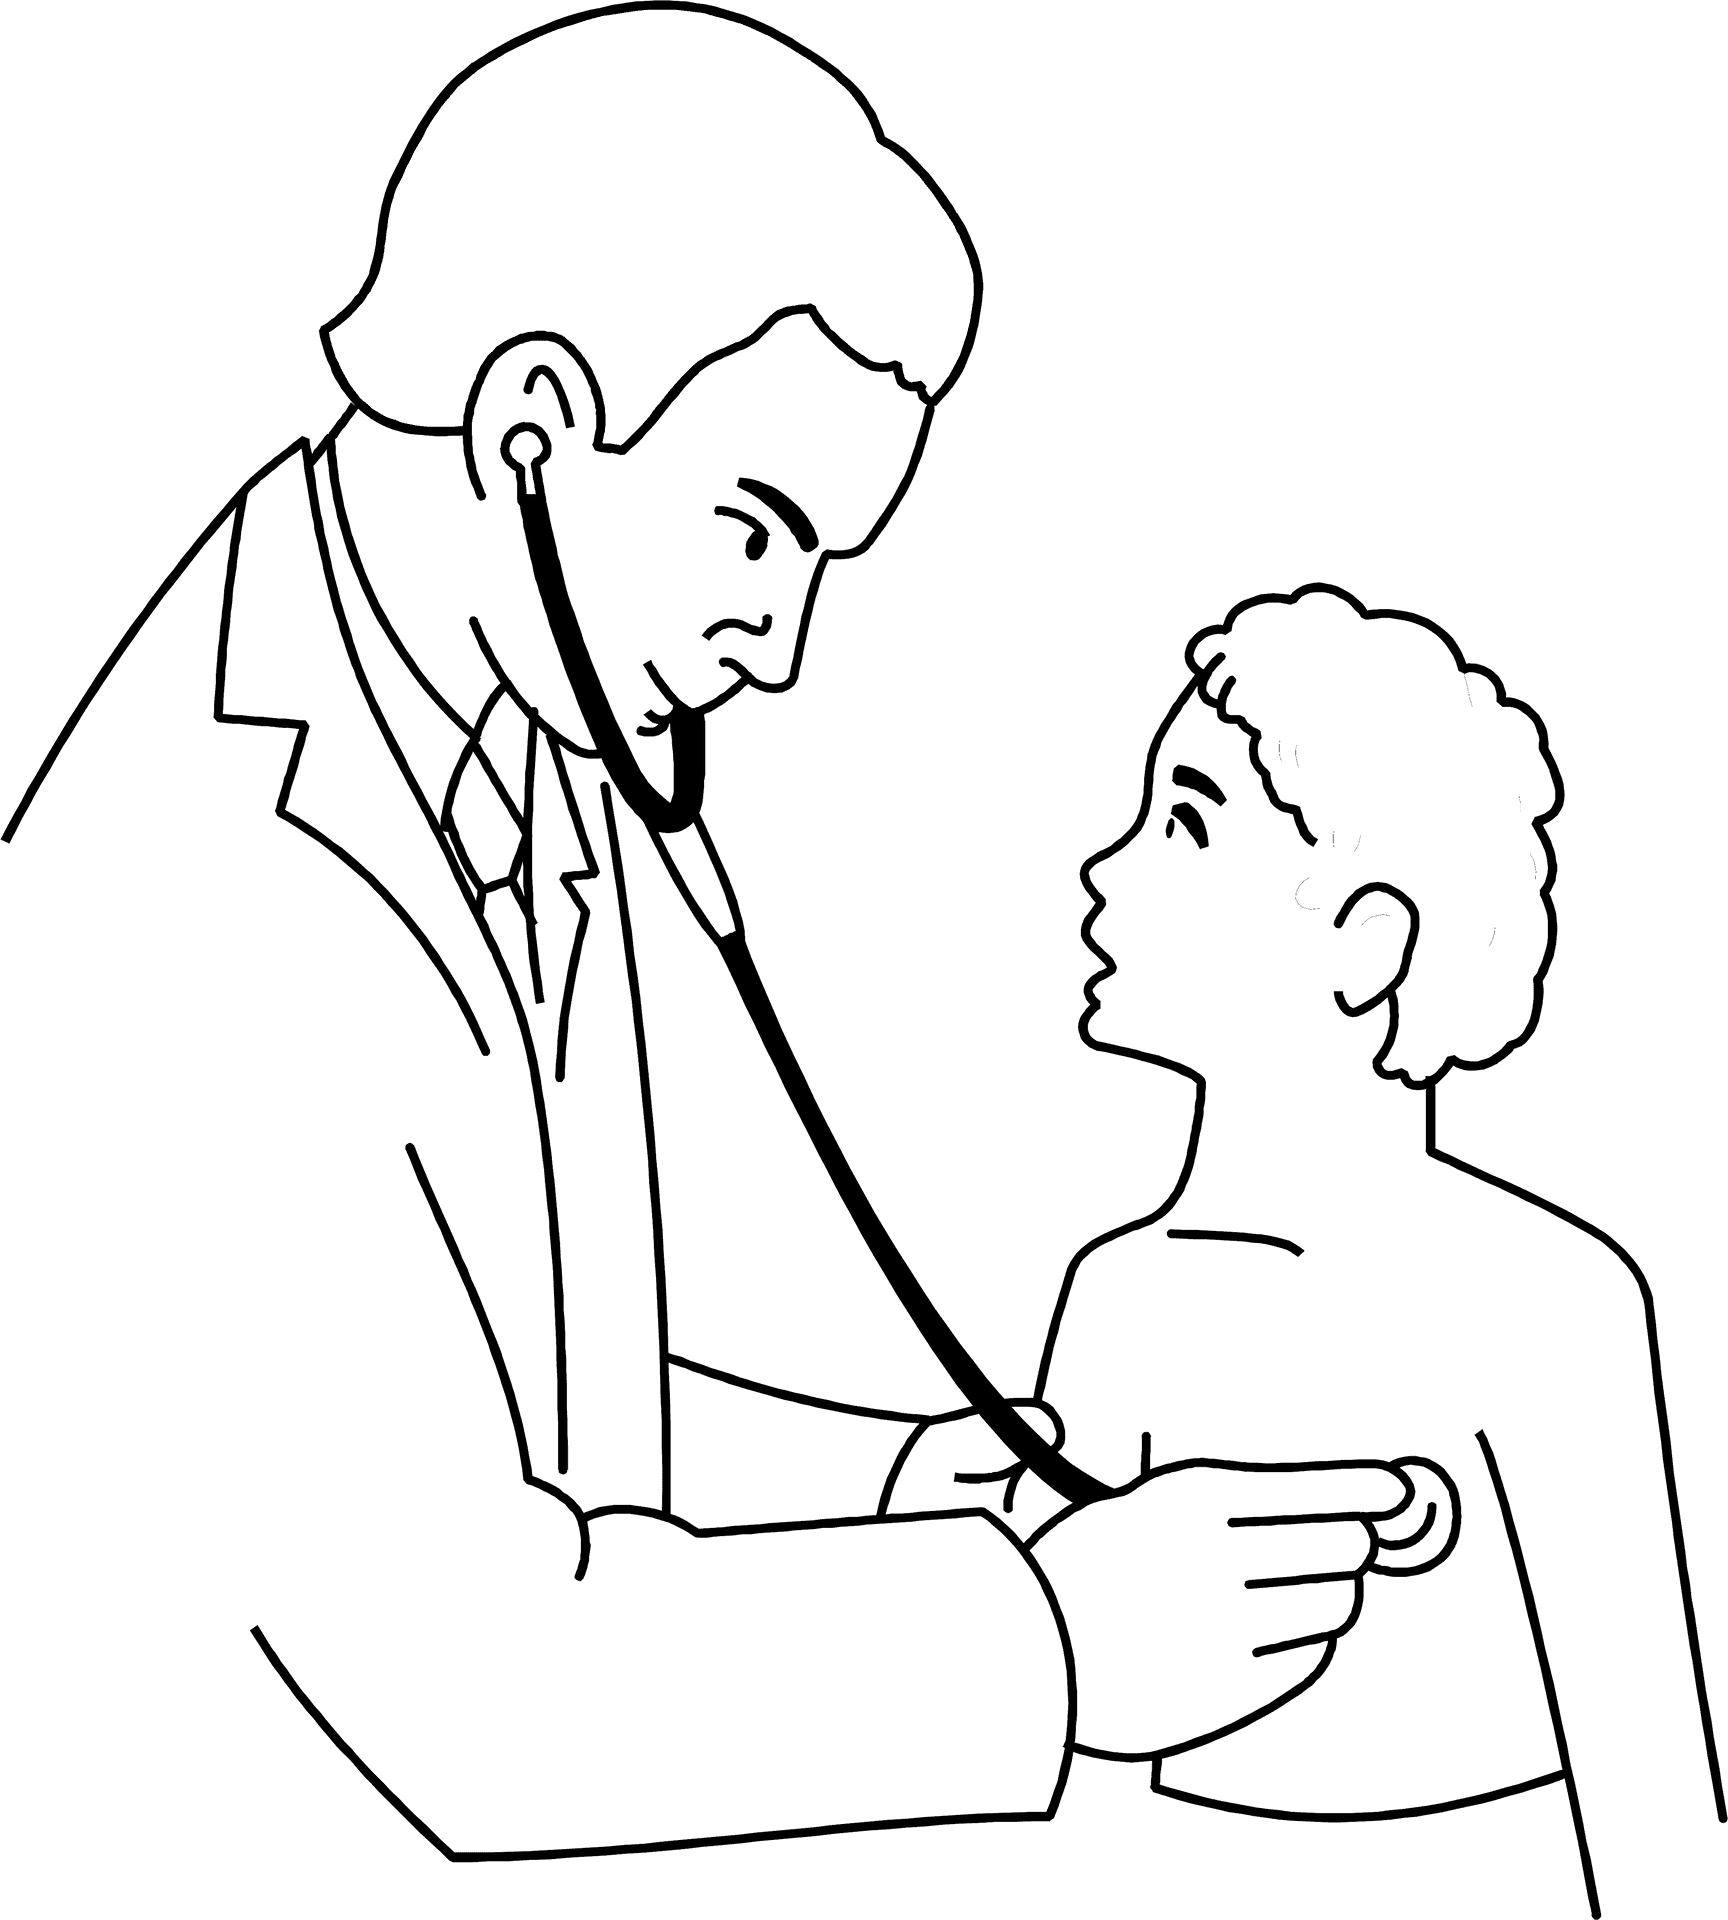 Pediatric Checkup Clipart PNG image